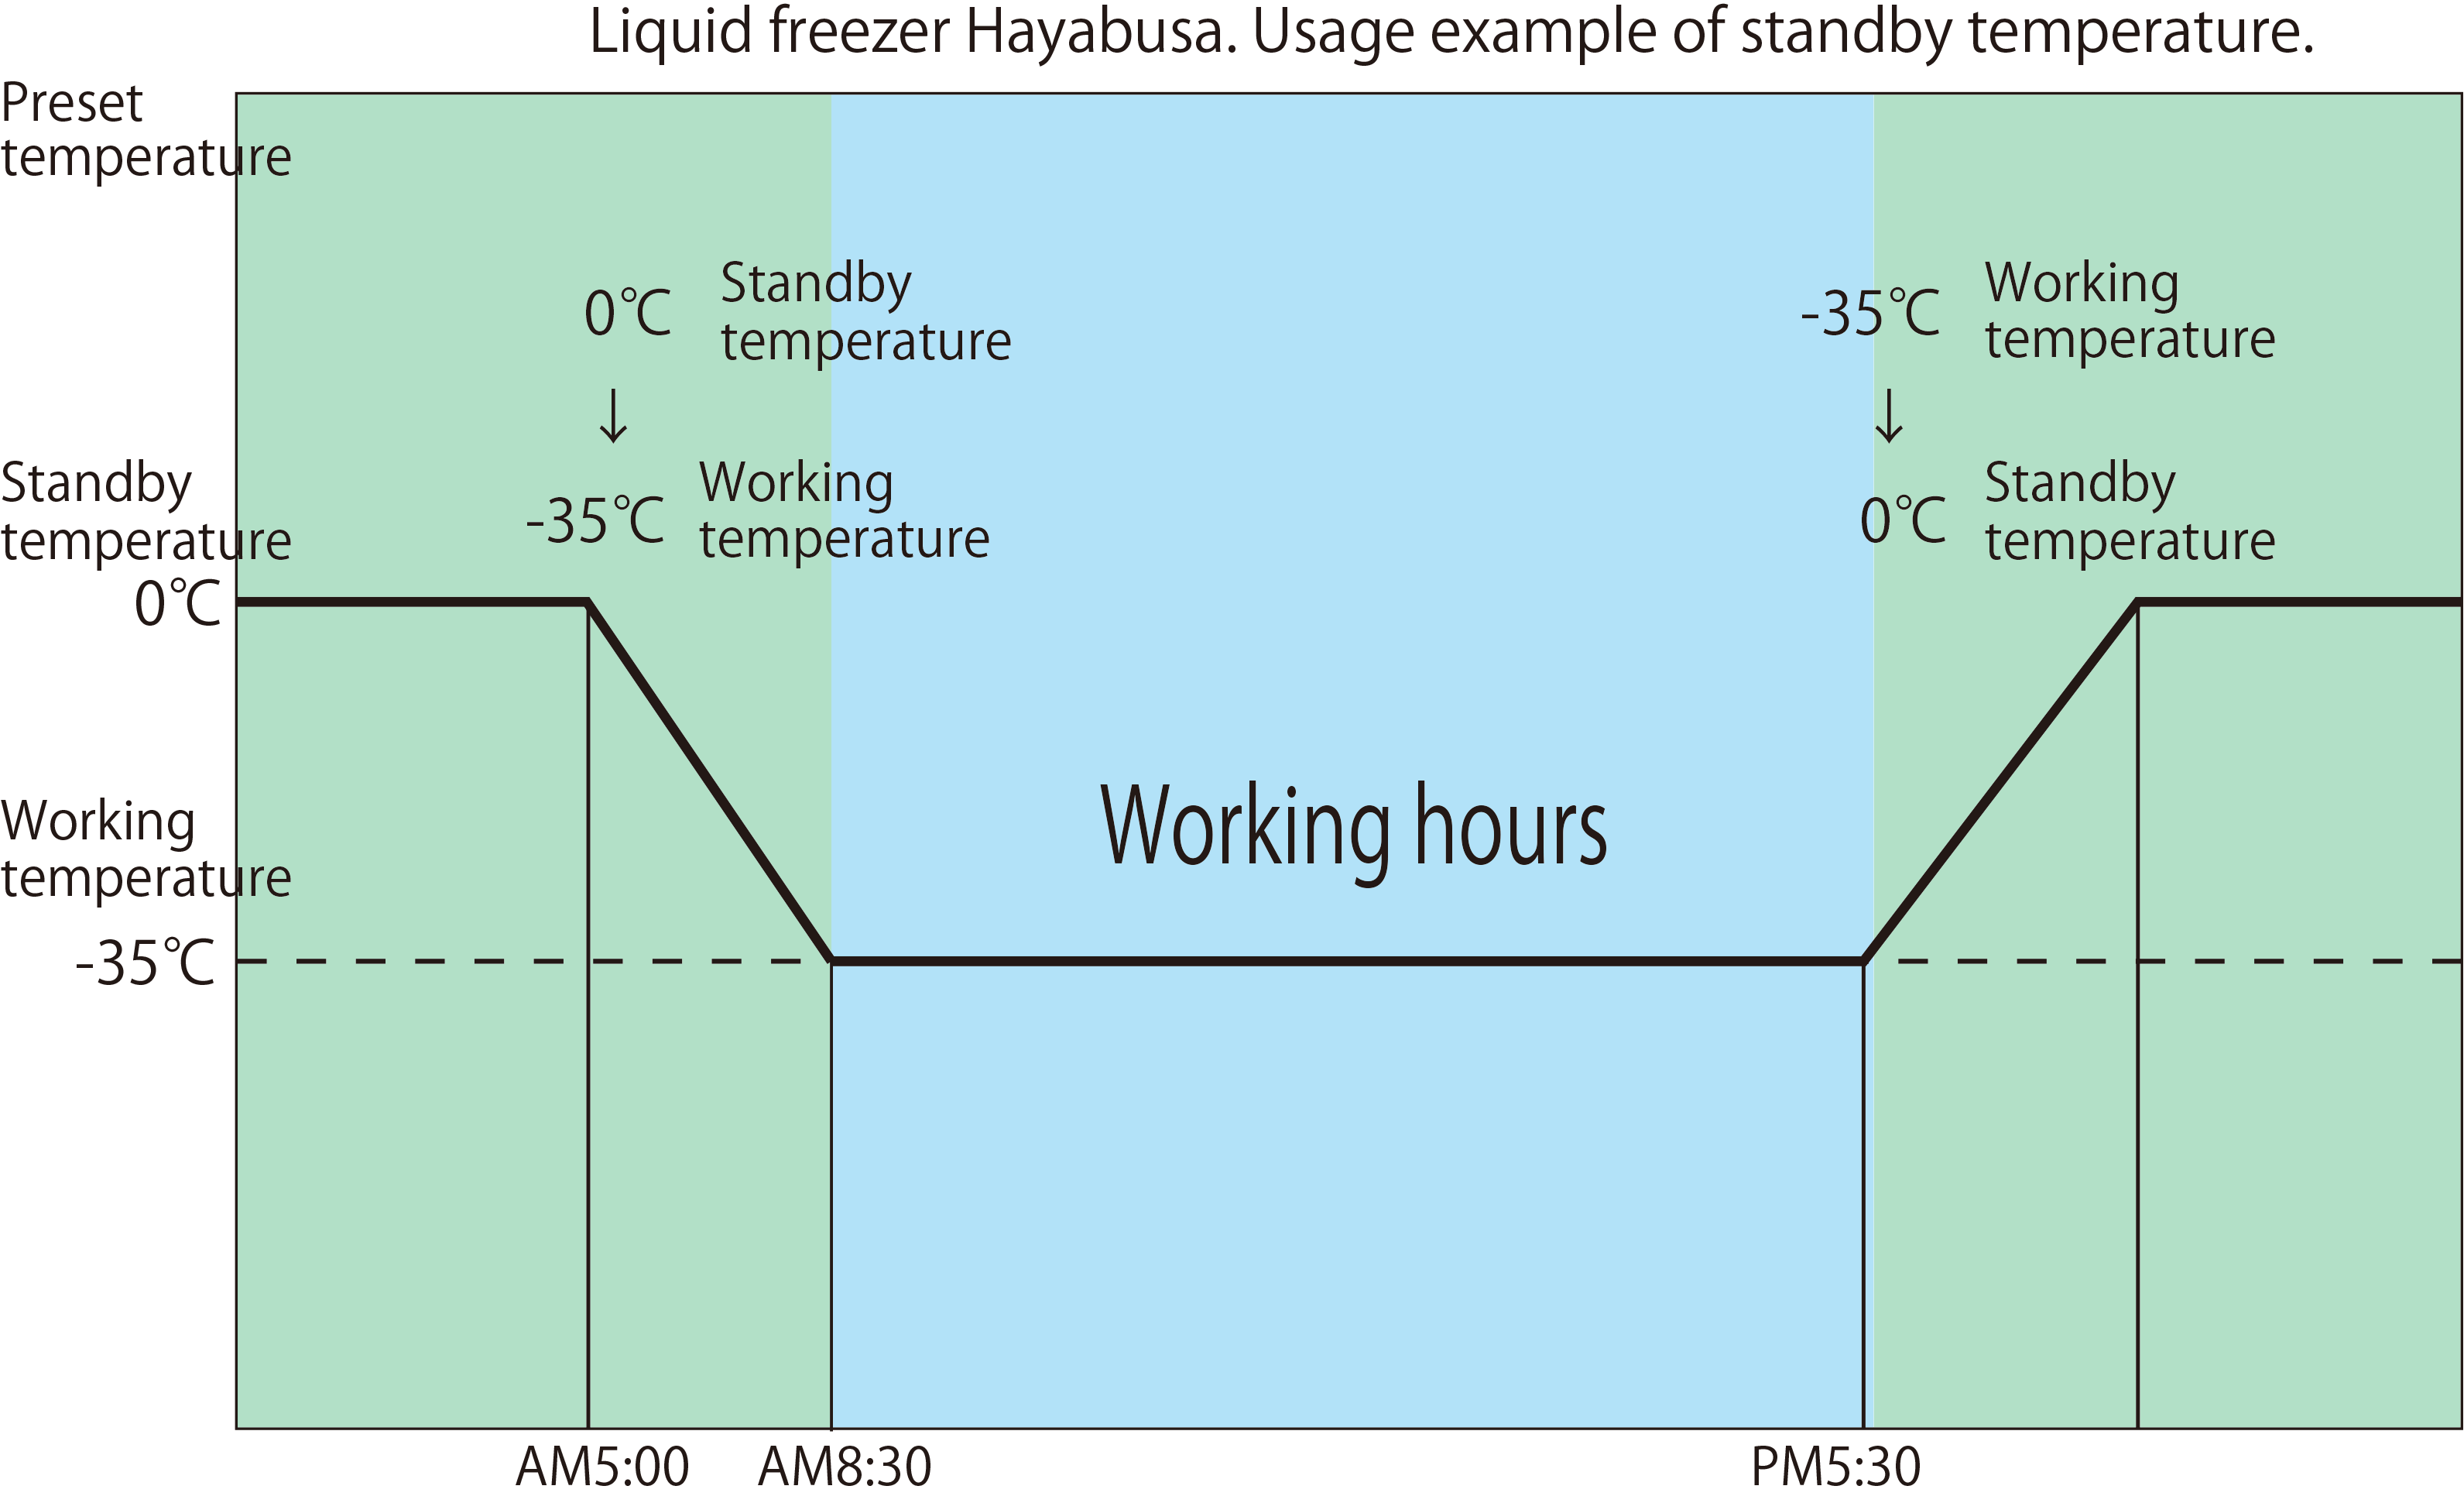 Operation schedule of liquid freezer Hayabusa